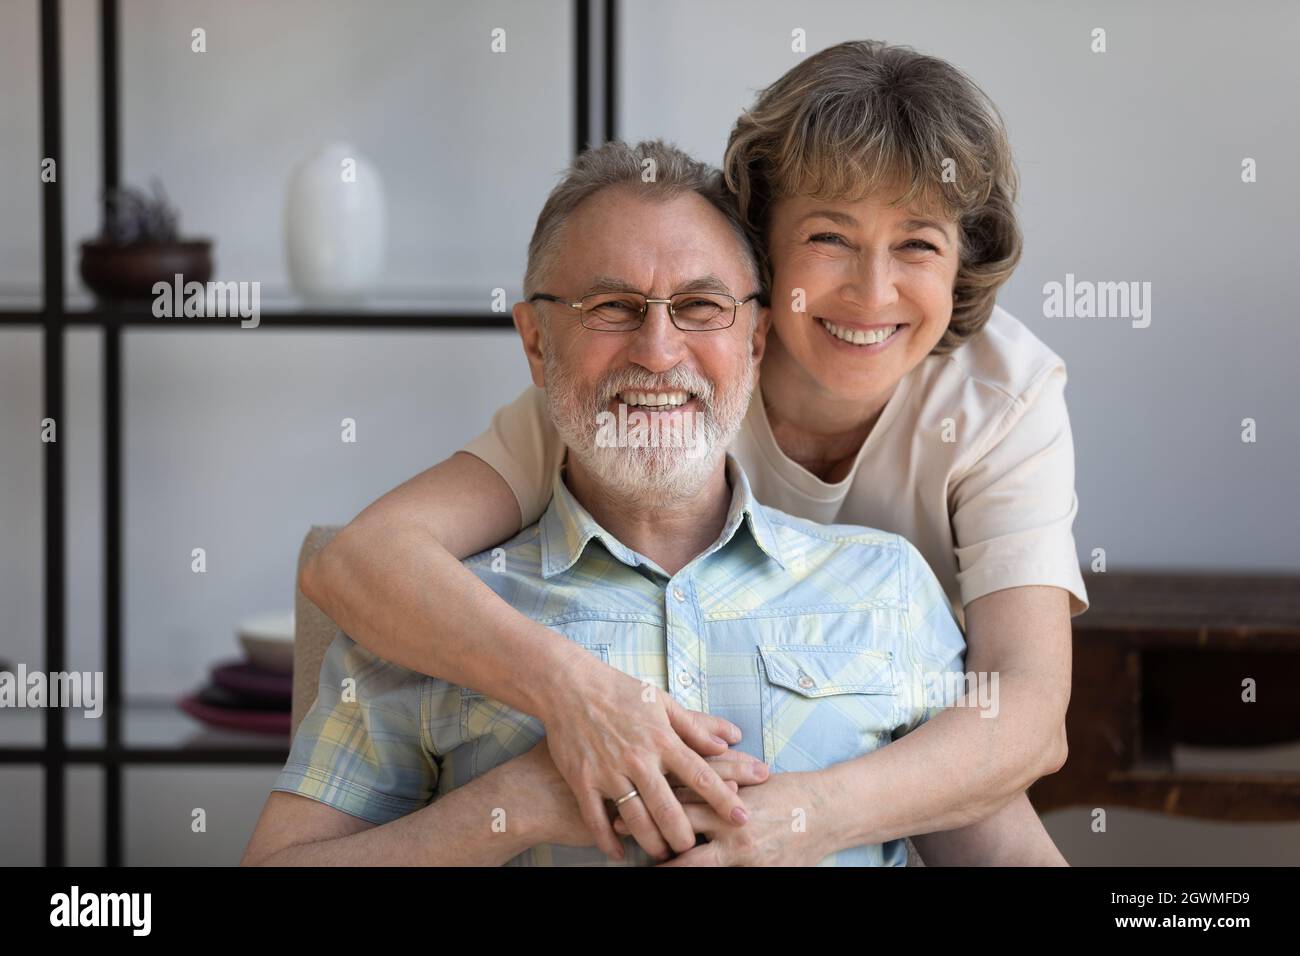 Portrait of affectionate mature bonding family couple. Stock Photo